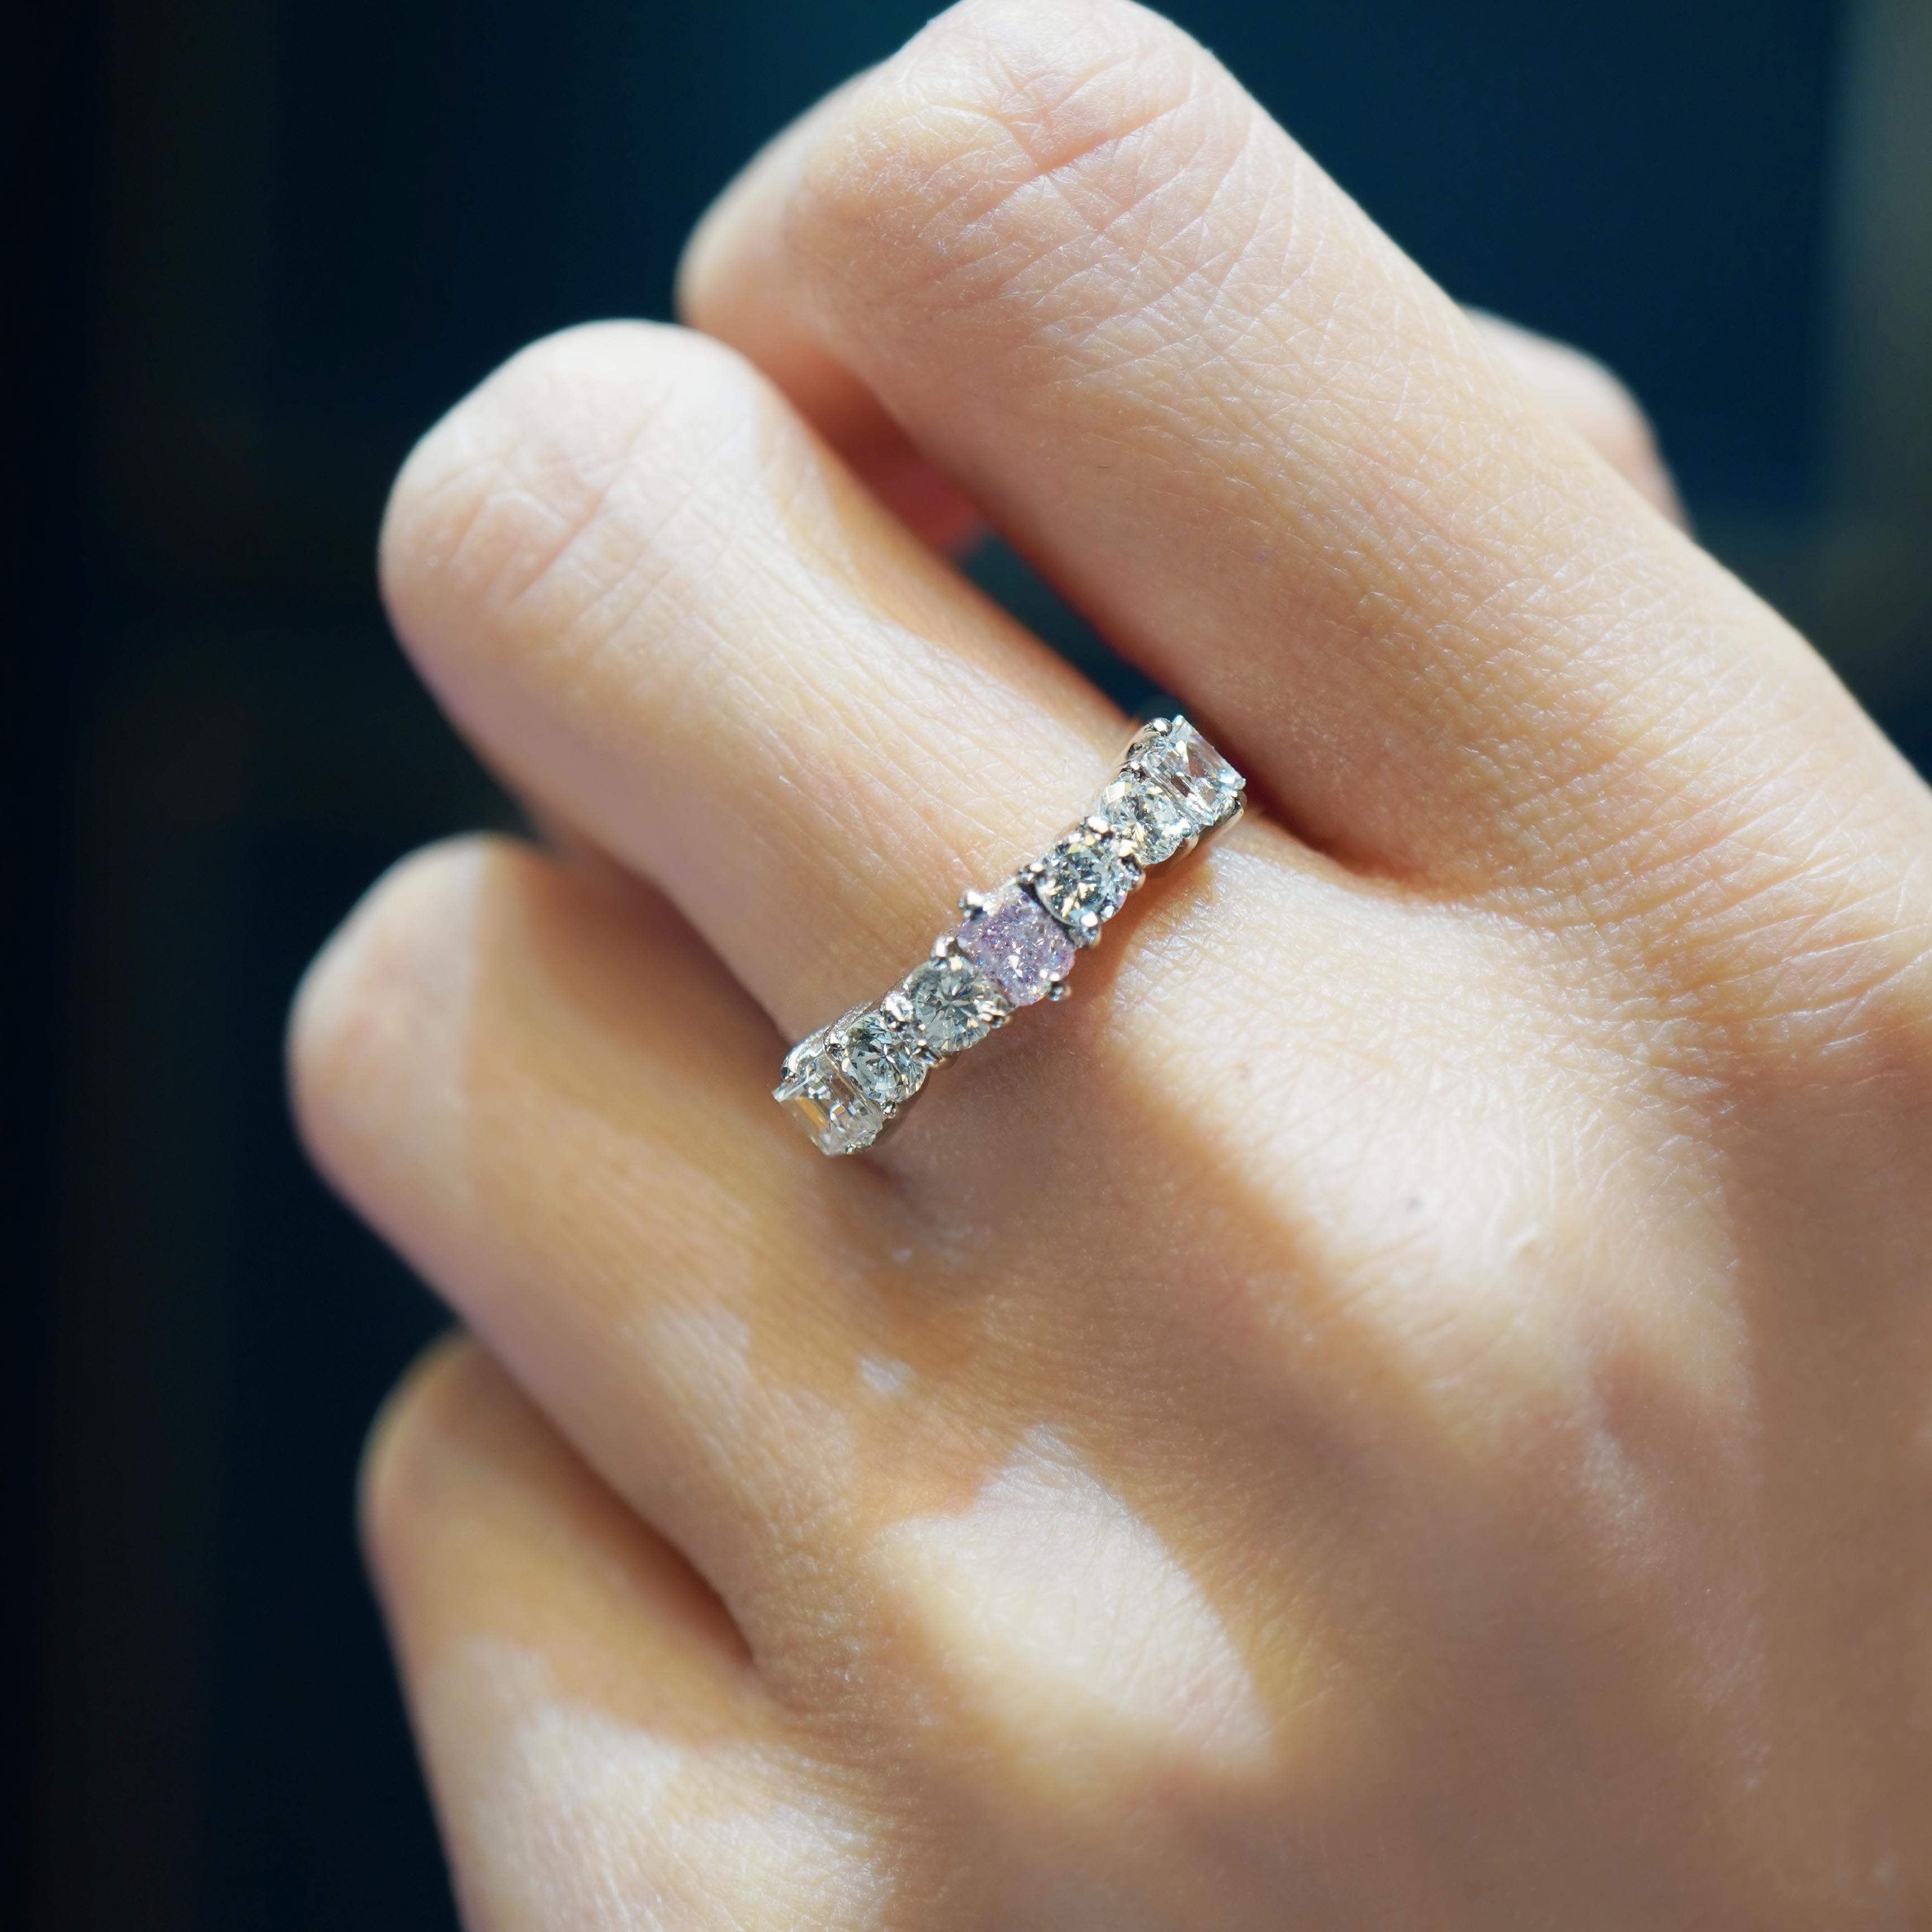 Art Nouveau CGL Certified 0.19 Carat Natural Fancy Pink Diamond PT 900 Solitaire Ring For Sale